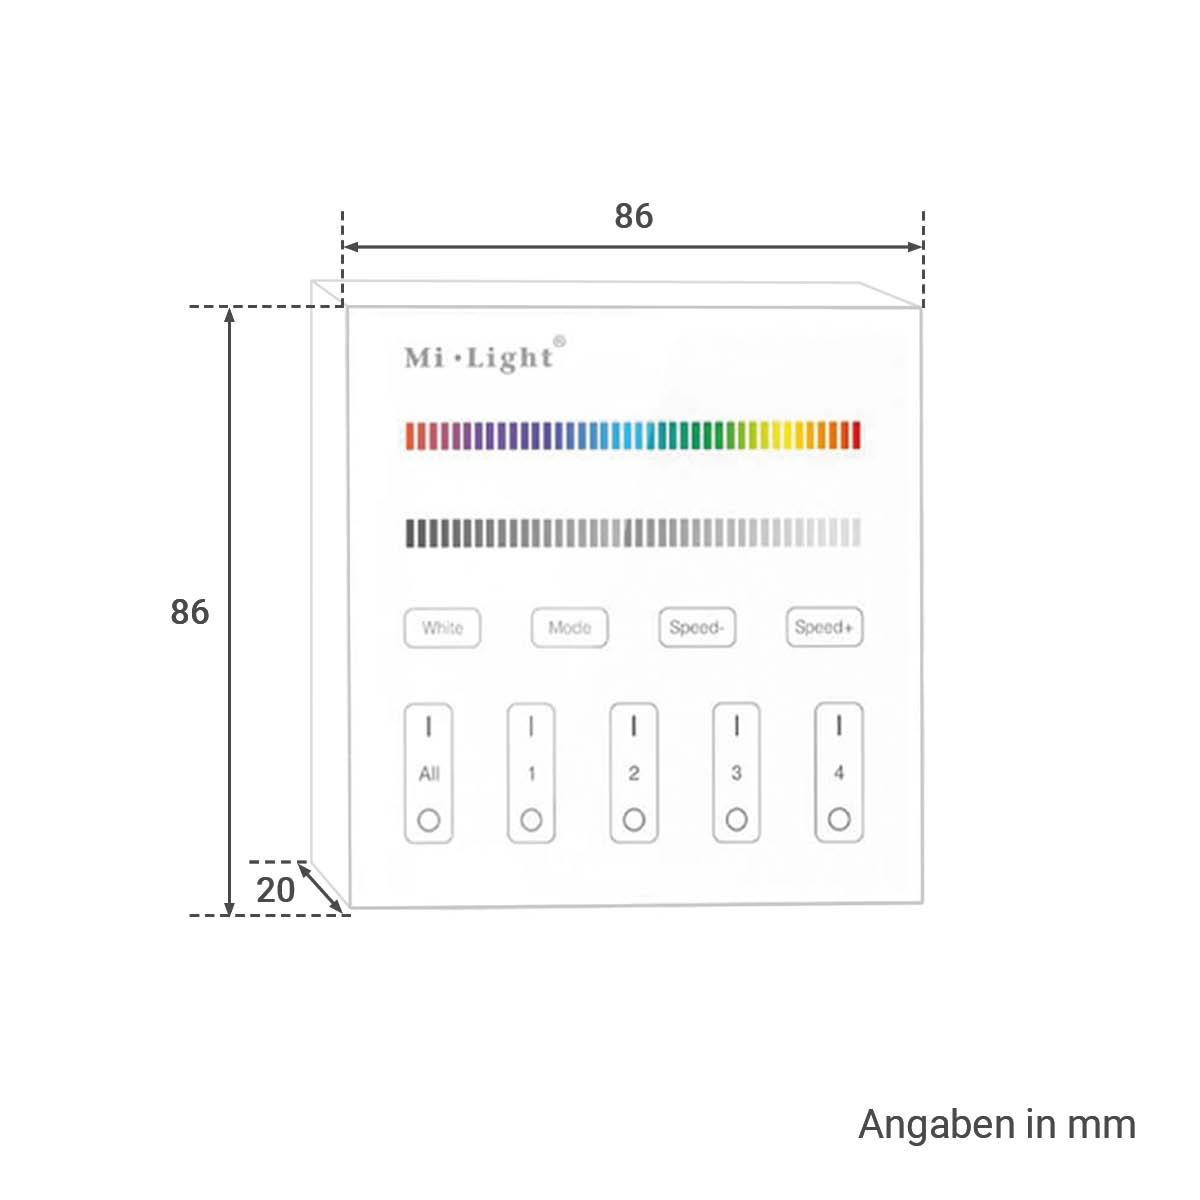 MiBoxer RGBW Wandschalter 4 Zonen Aufbau Dimmen Schalten Farbsteuerung batteriebetrieben B3